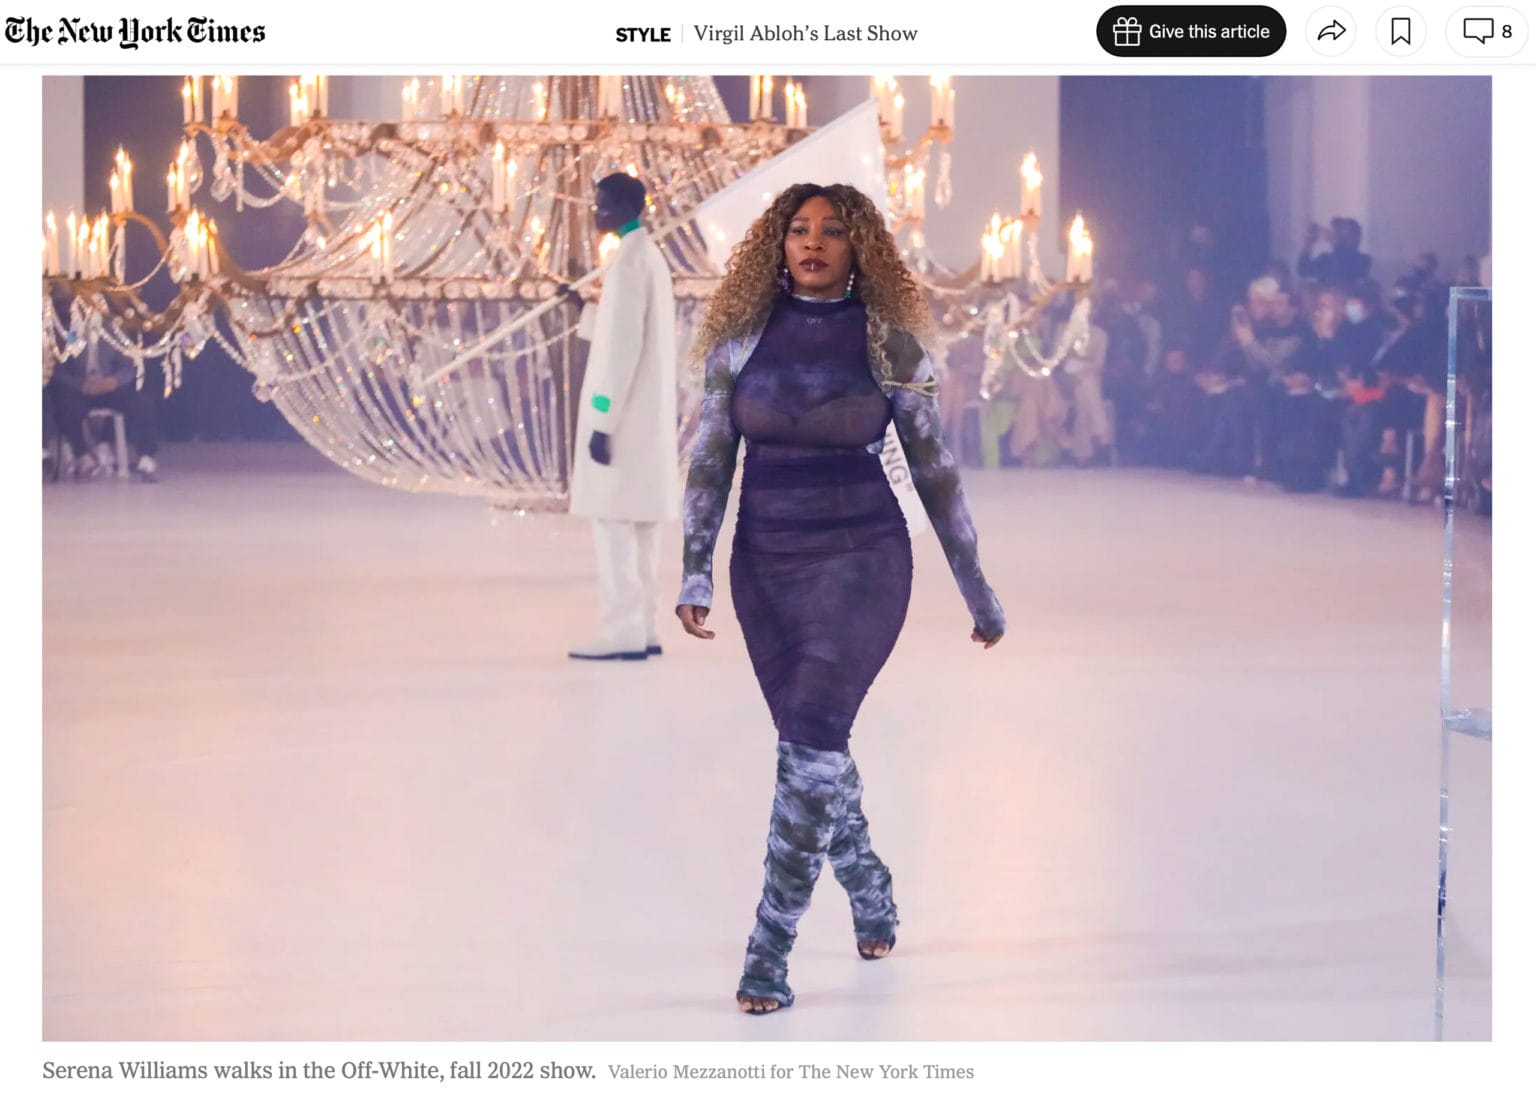 Serena Williams Walking The Off-White Fashion Show, Photo by Valerio Mezzanotti for The New York Times